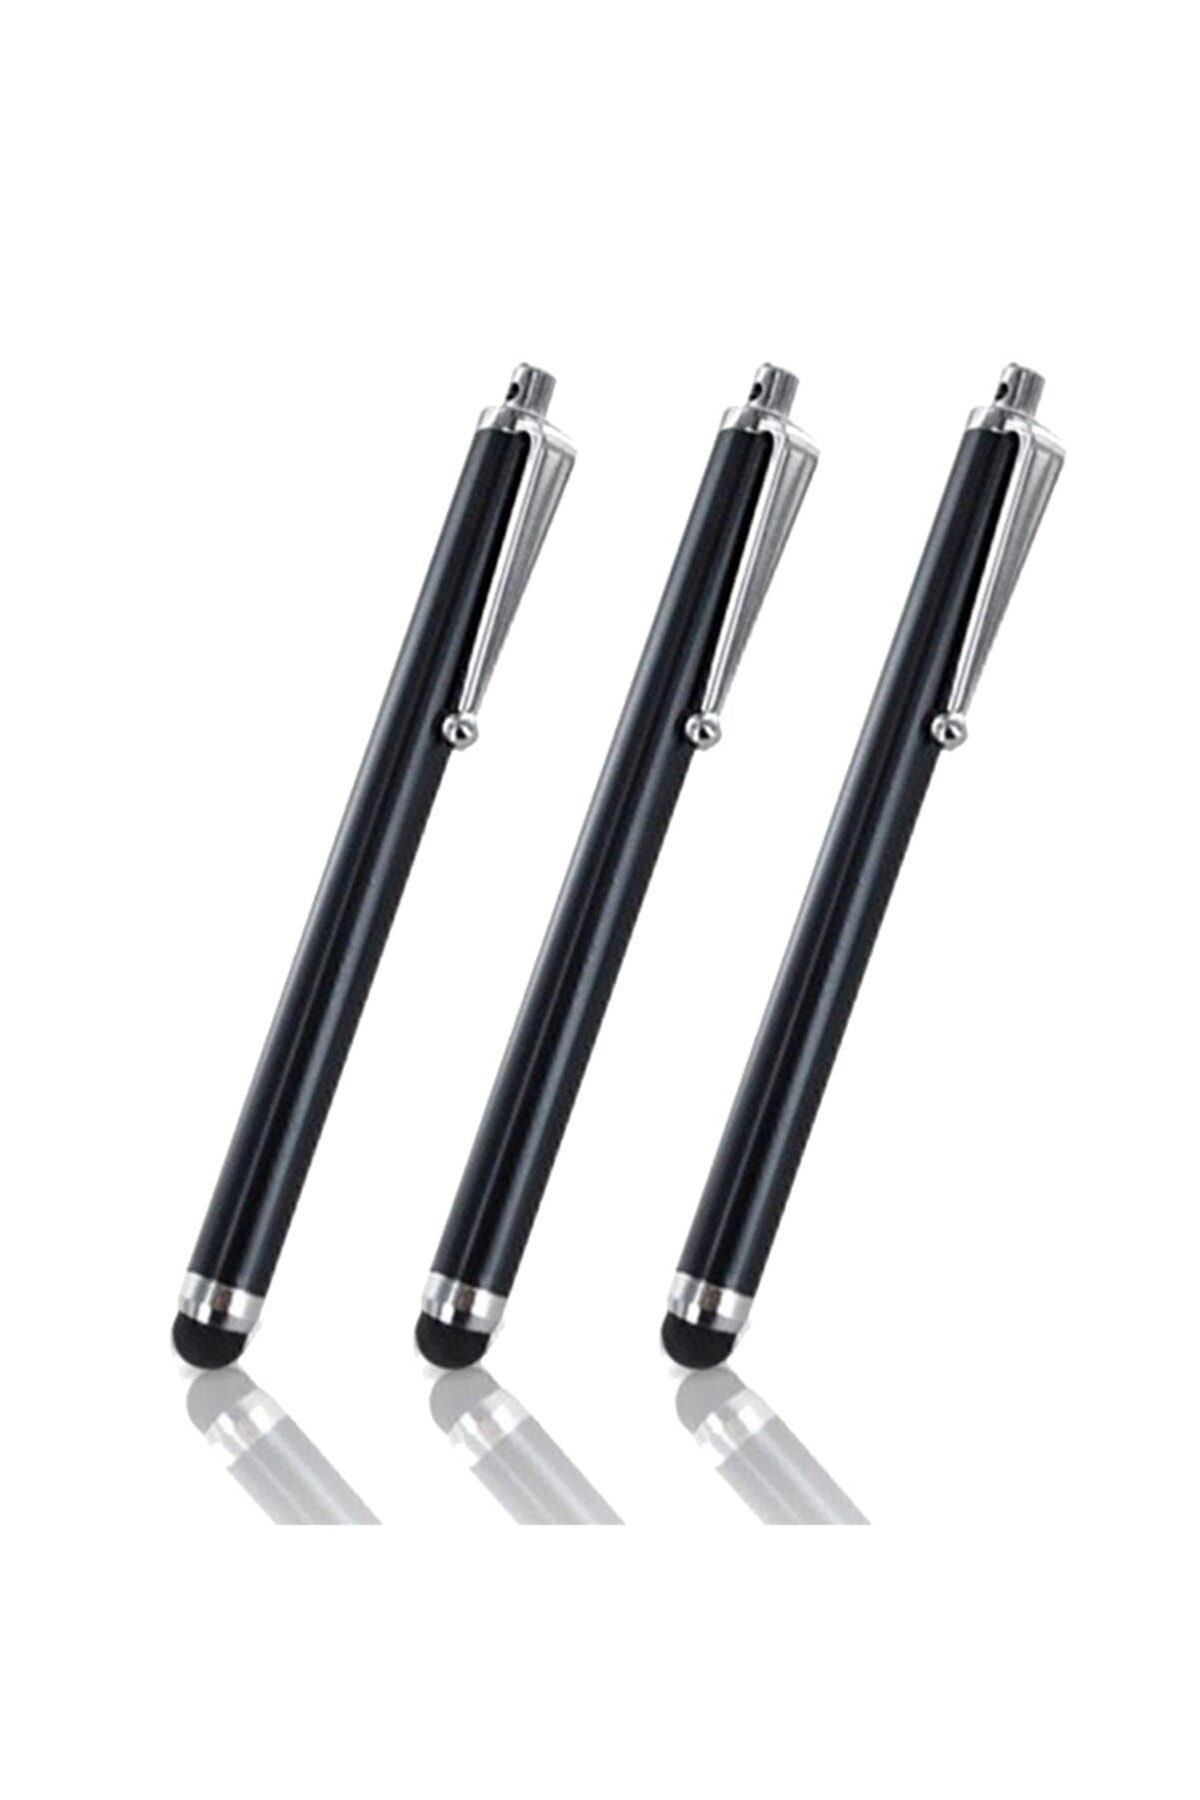 Redclick 3 Adet Dokunmatik Kalem - Akıllı Tahta Tablet Telefonlar Için Kalem